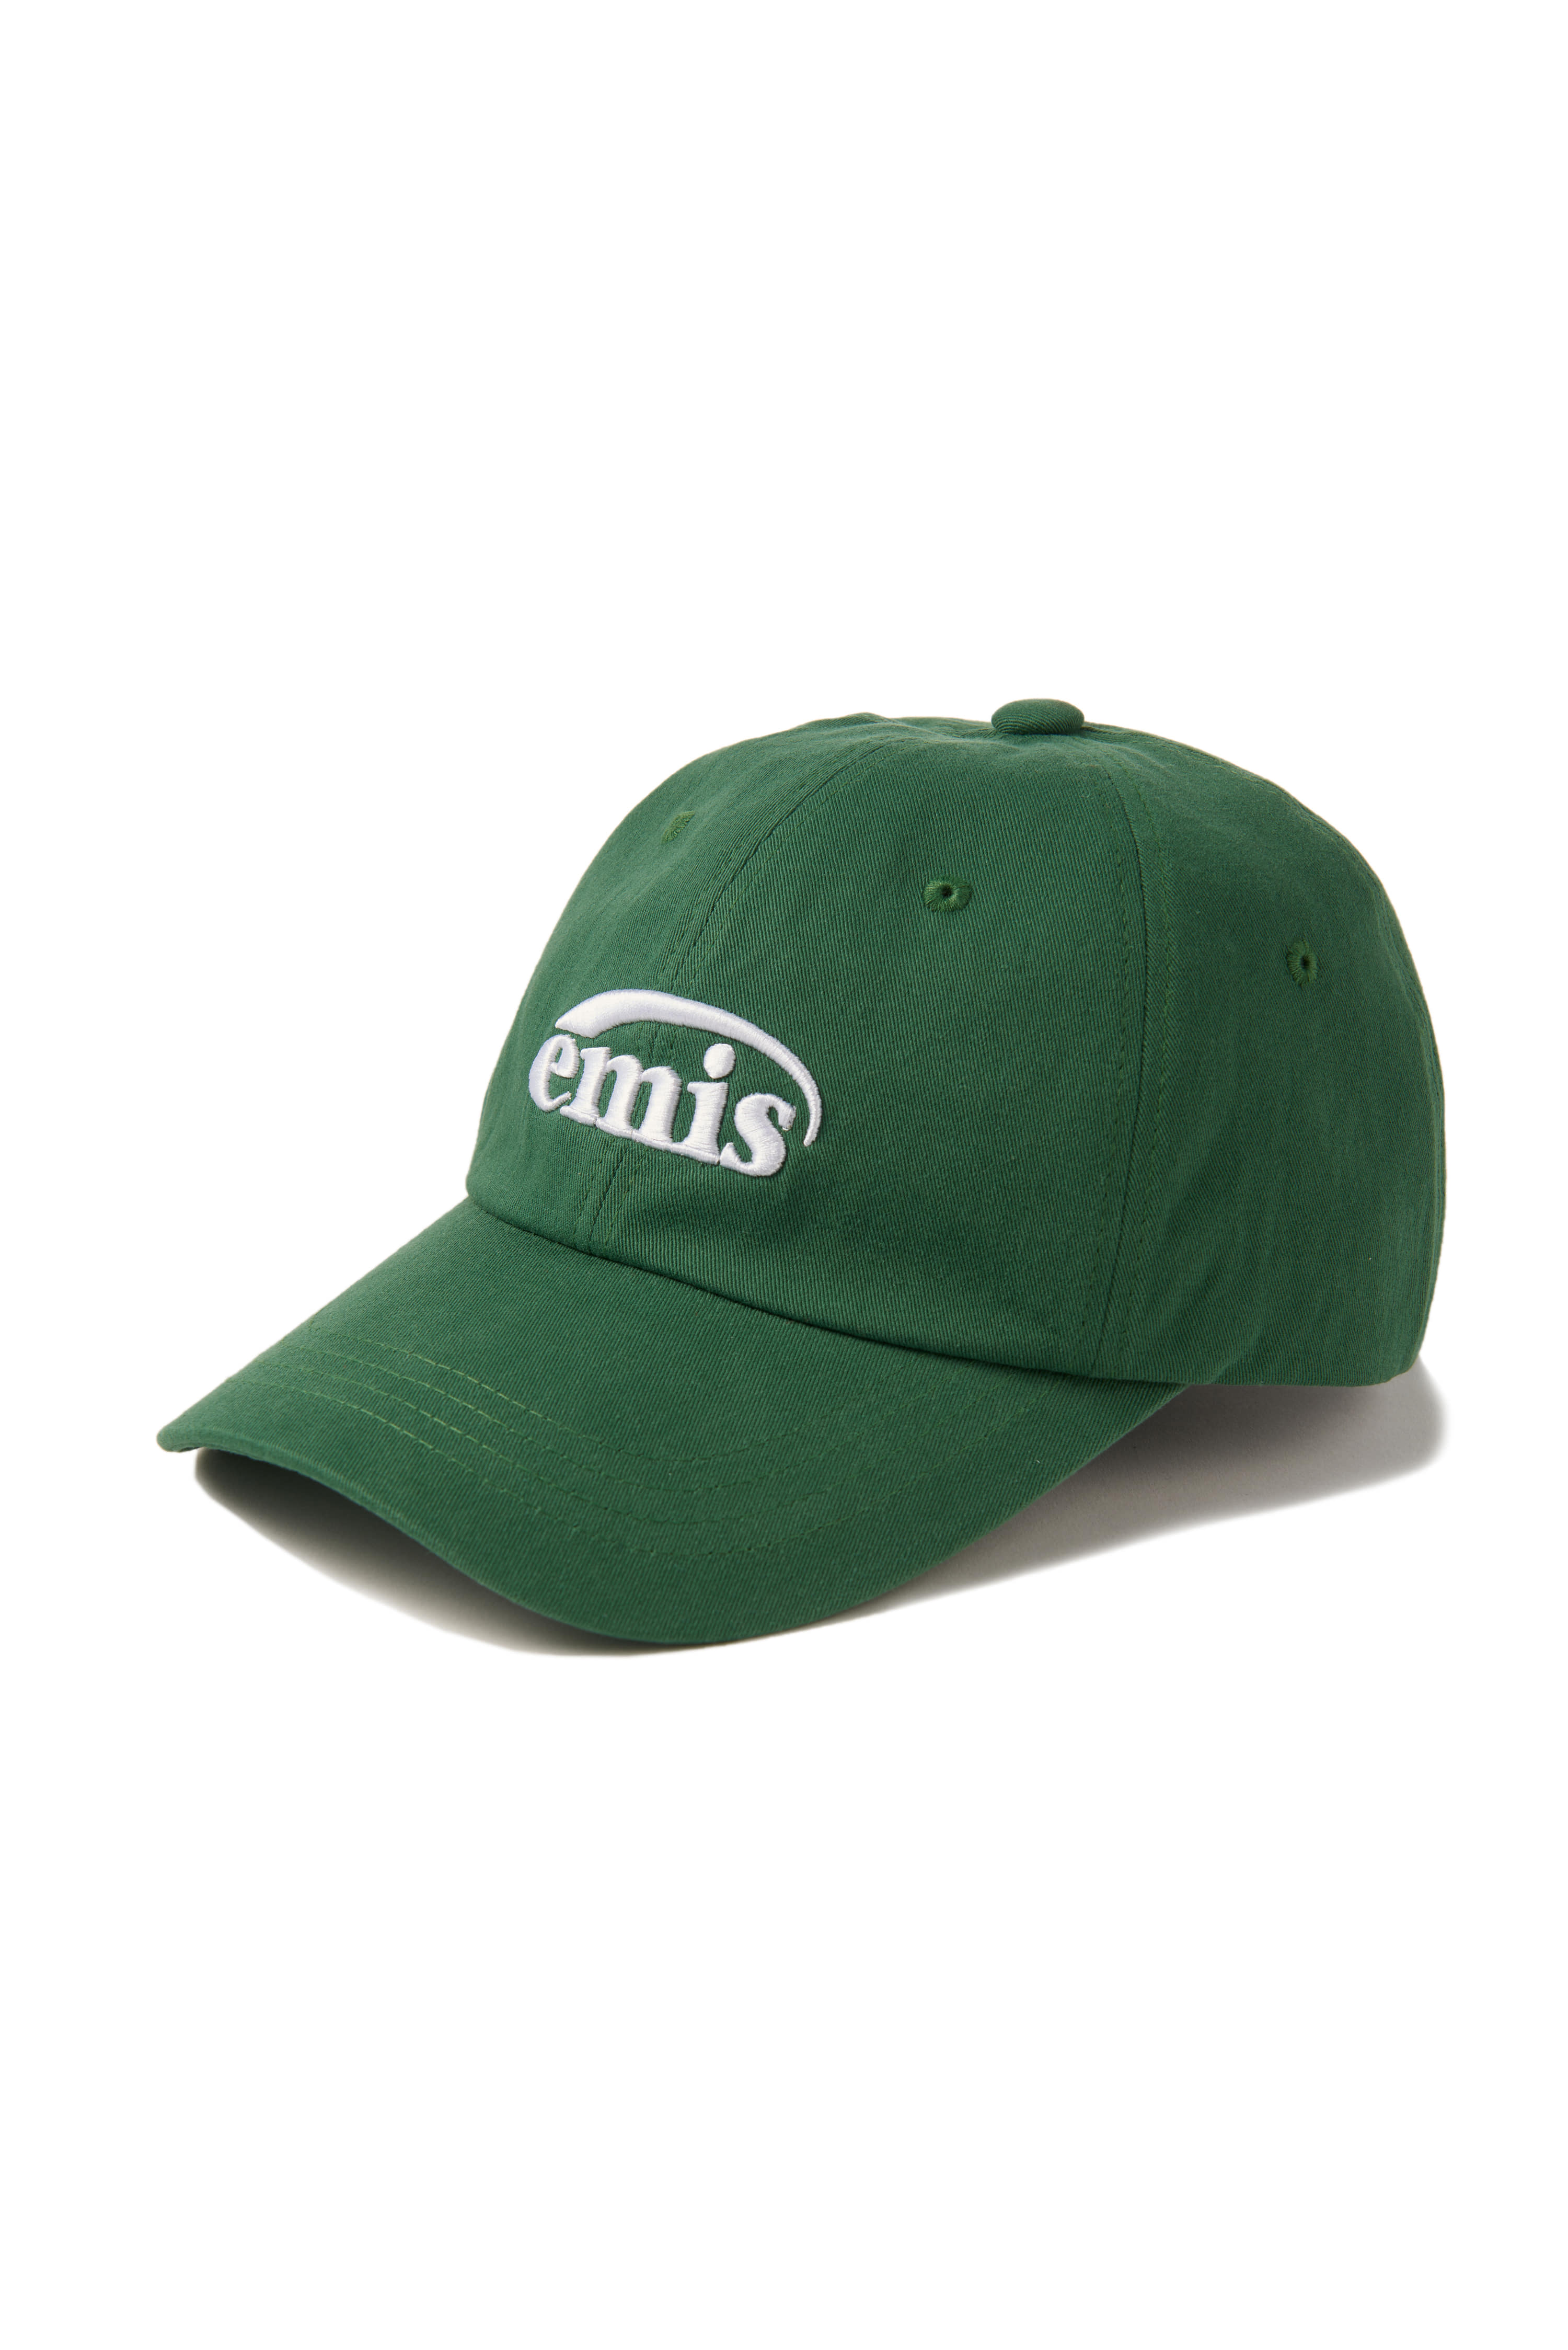 NEW LOGO EMIS CAP-GREEN